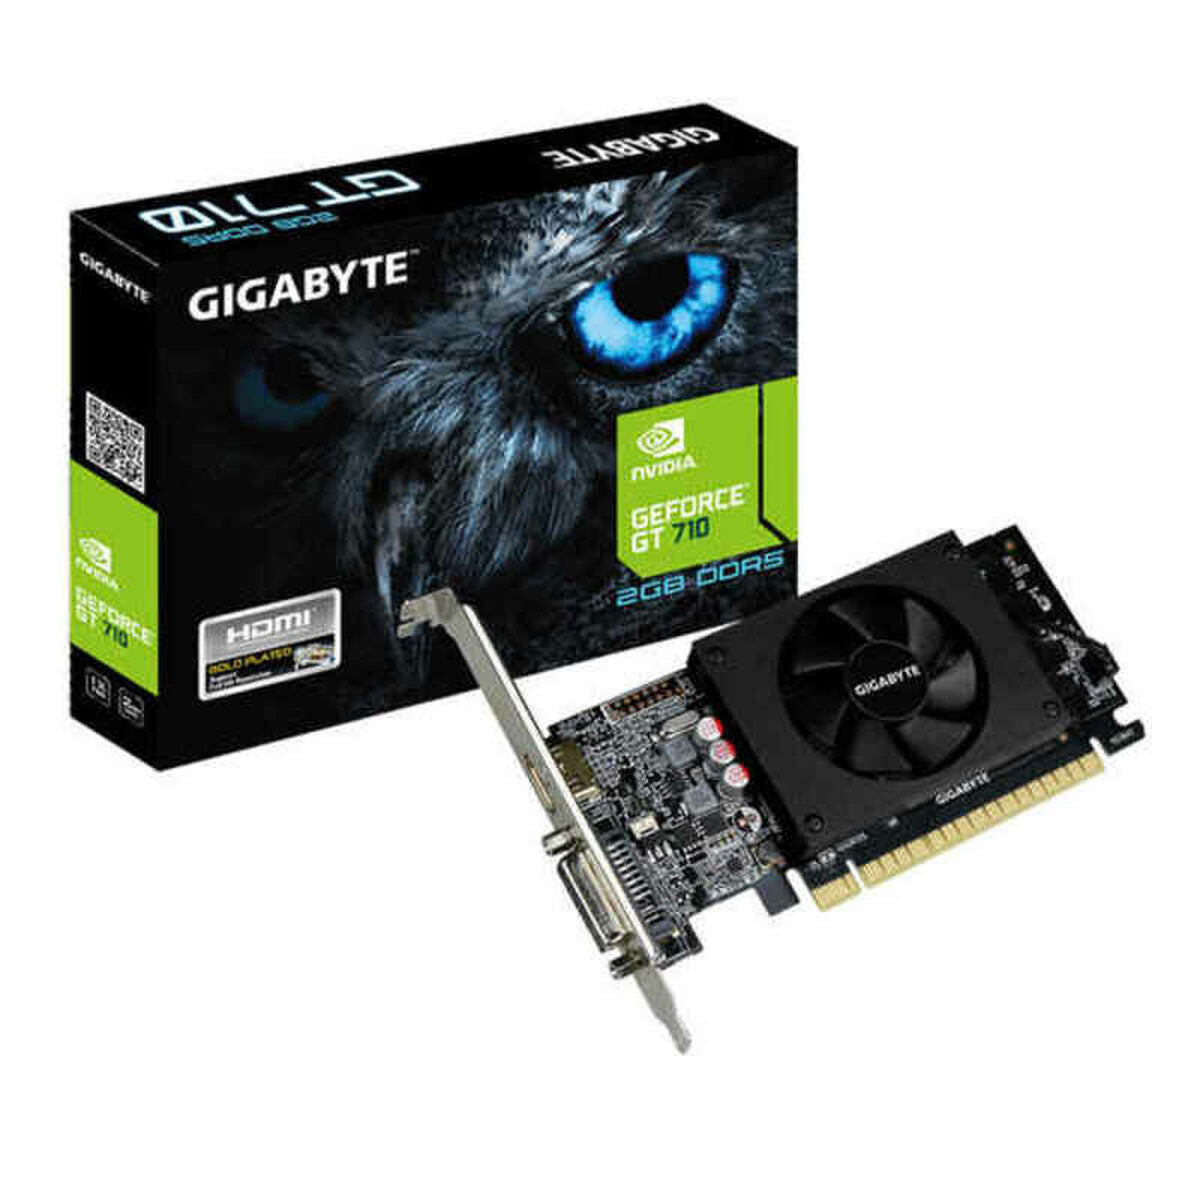 Graphics card Gigabyte GeForce GT710 2 GB DDR5